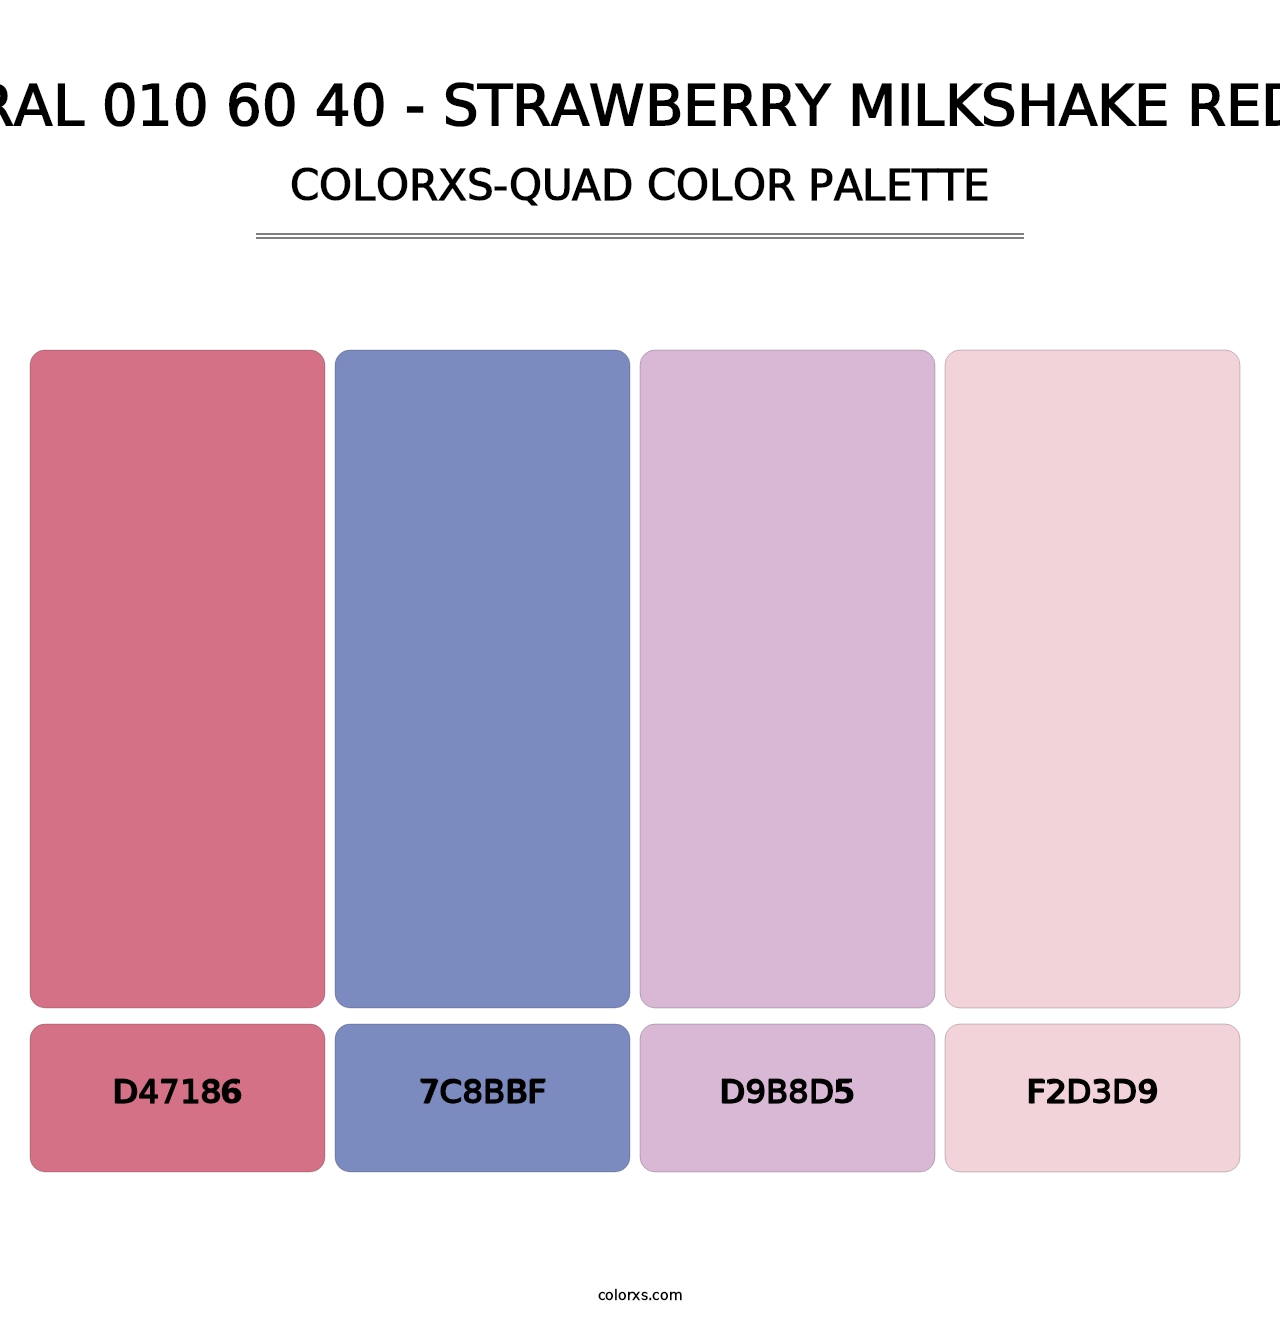 RAL 010 60 40 - Strawberry Milkshake Red - Colorxs Quad Palette